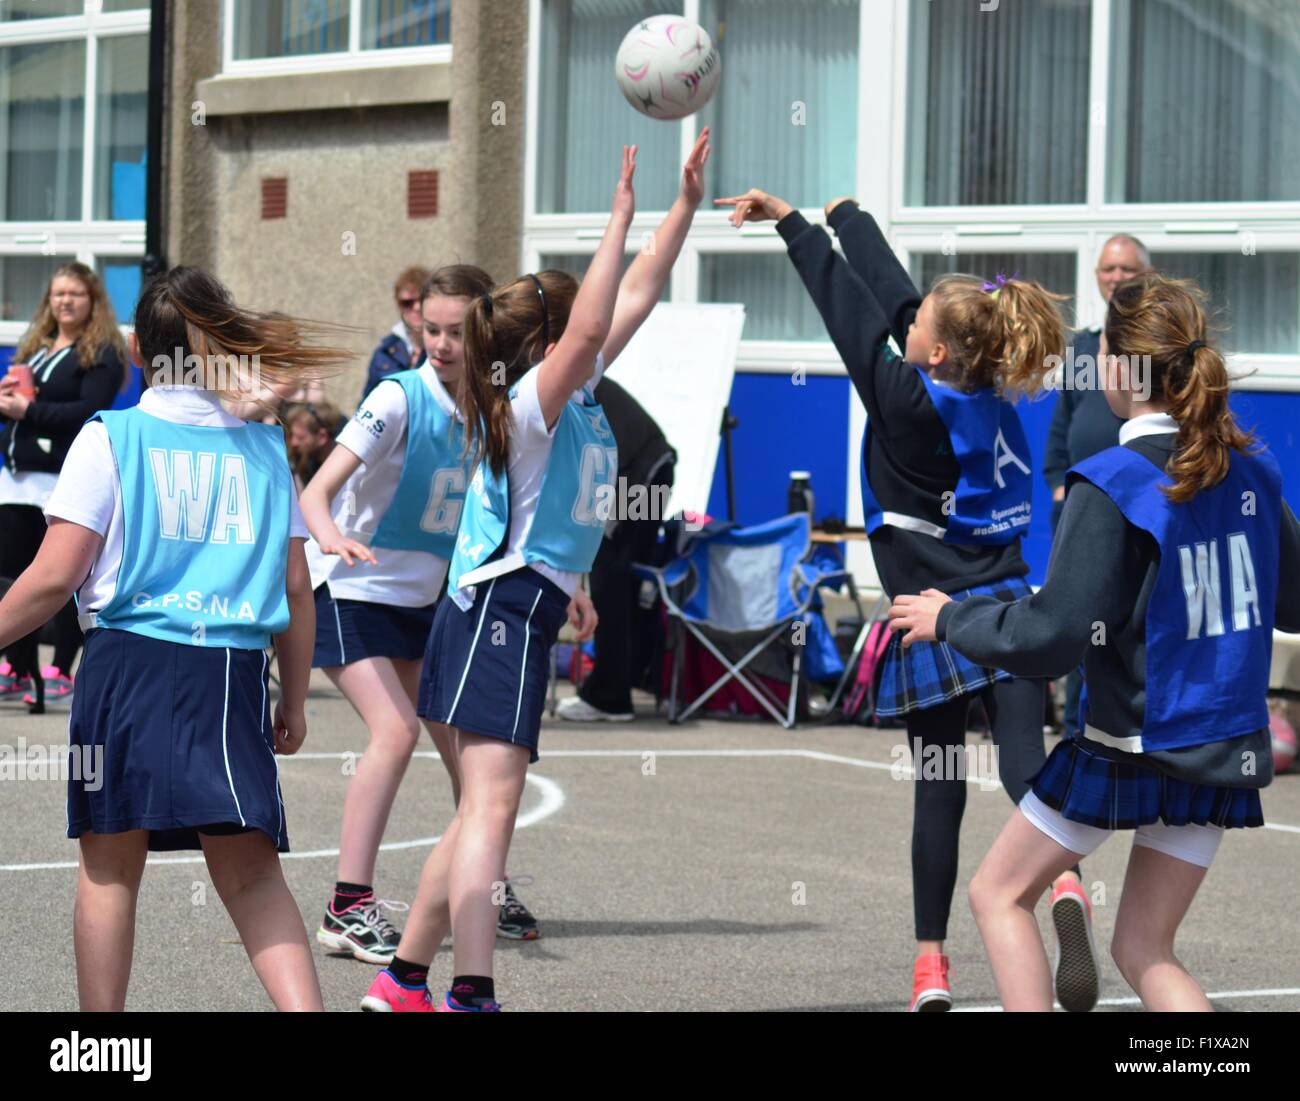 Girls play netball outside Stock Photo